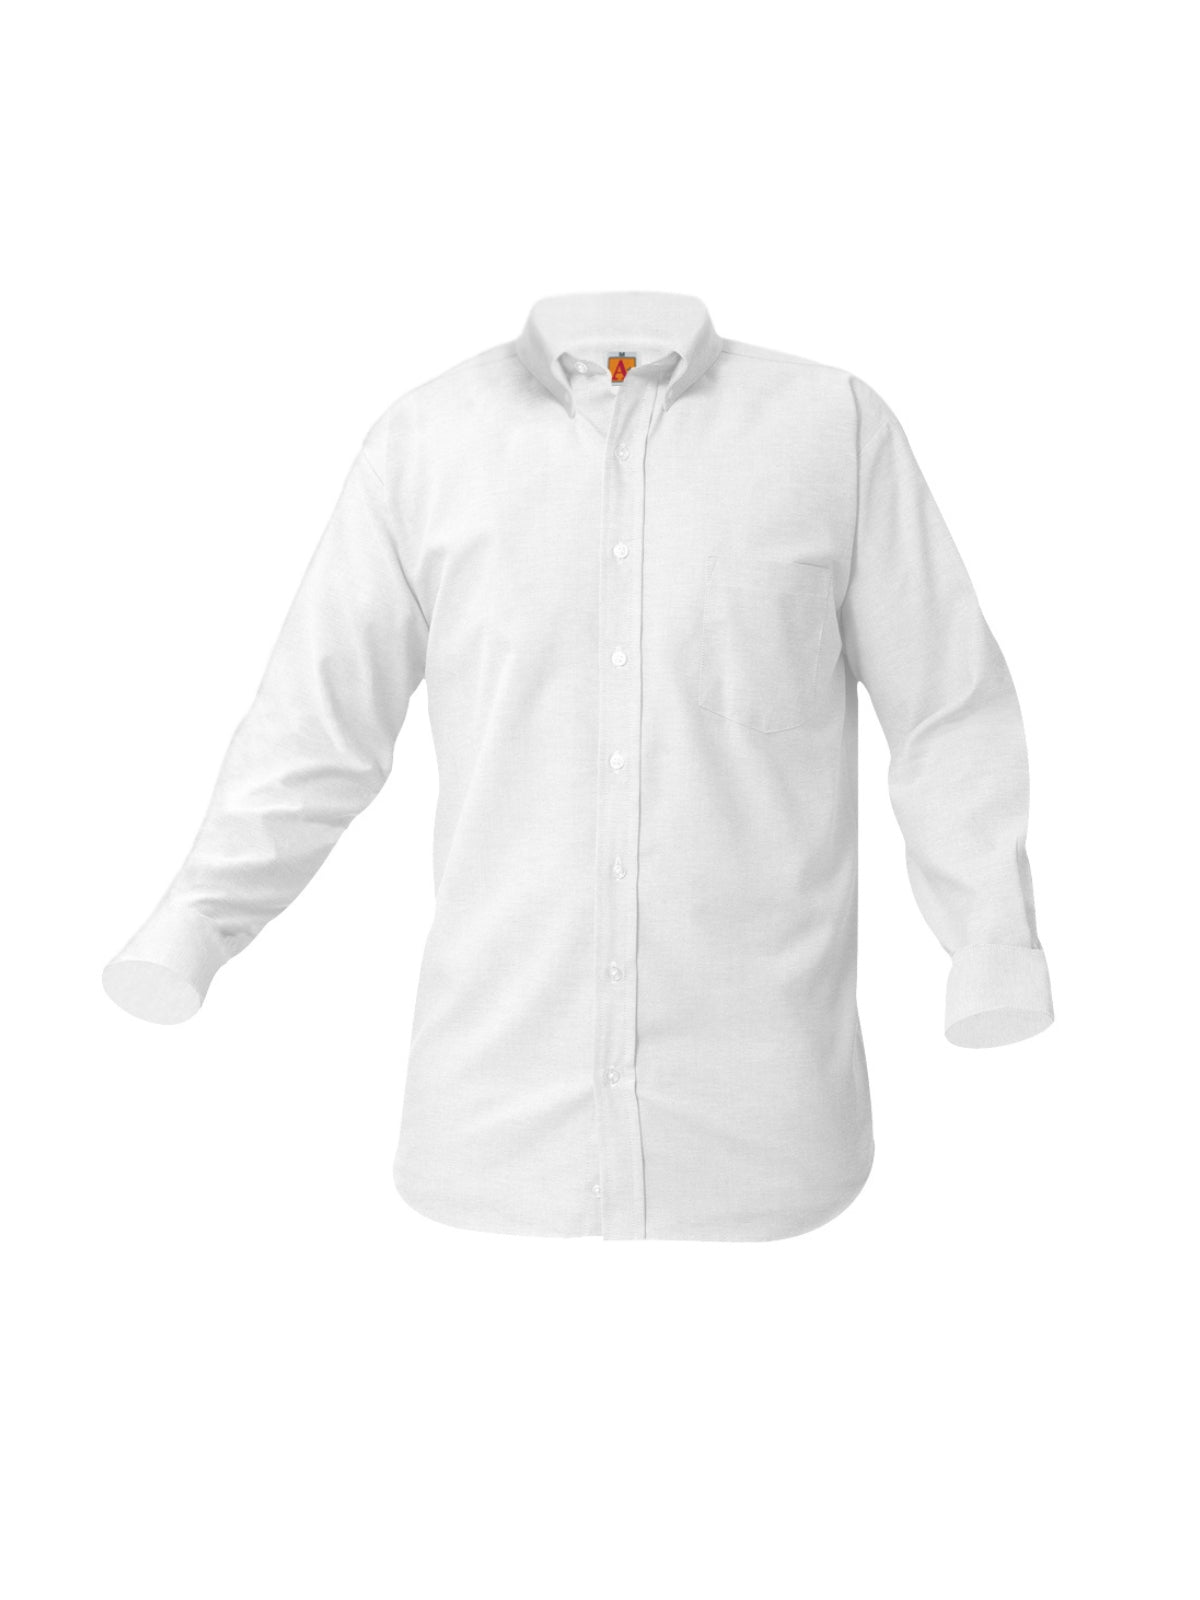 Boys' and Men's Oxford Long Sleeve Shirt - 8137 - White